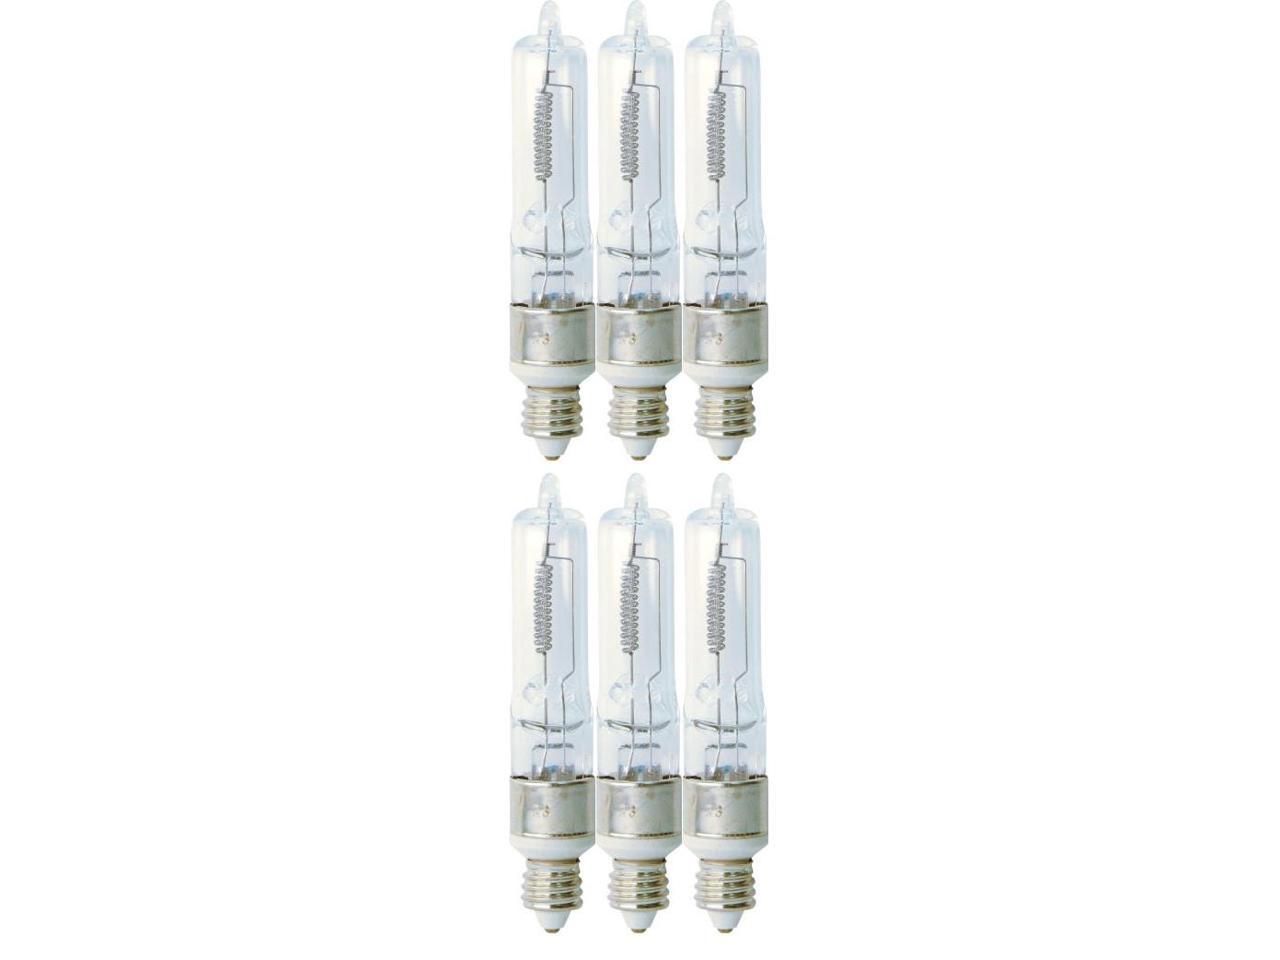 (6 bulbs) GE Lighting 43700 Halogen T4 250-watt, 5000 Lumen T4 Miniature Light Bulb with candelabra base, 2950K warm white, clear quartz